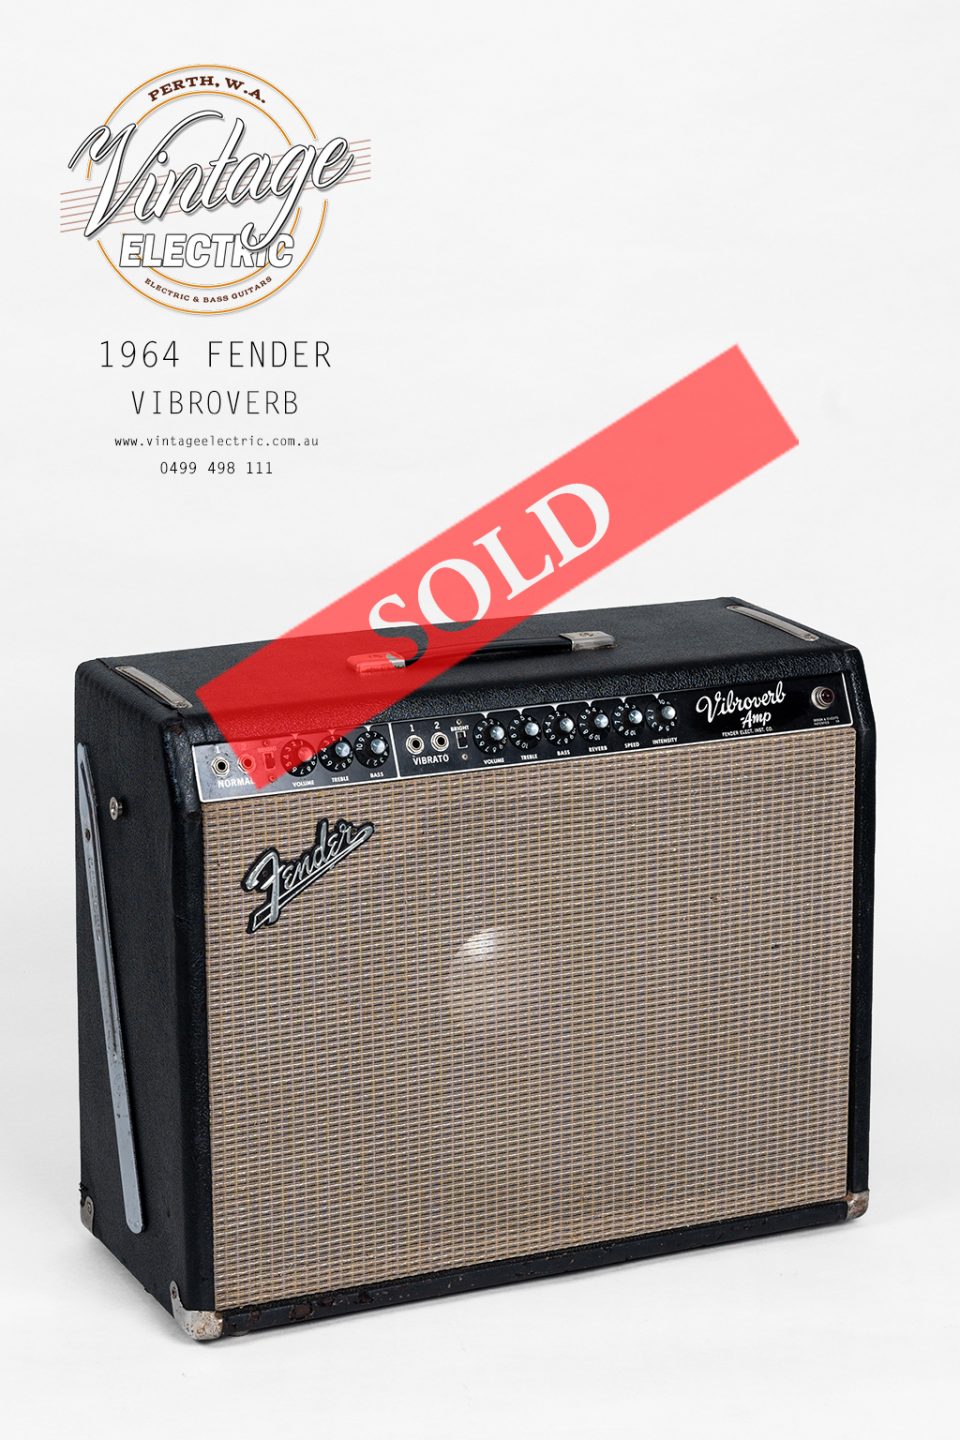 1964 Fender Vibroverb LARGE SOLD